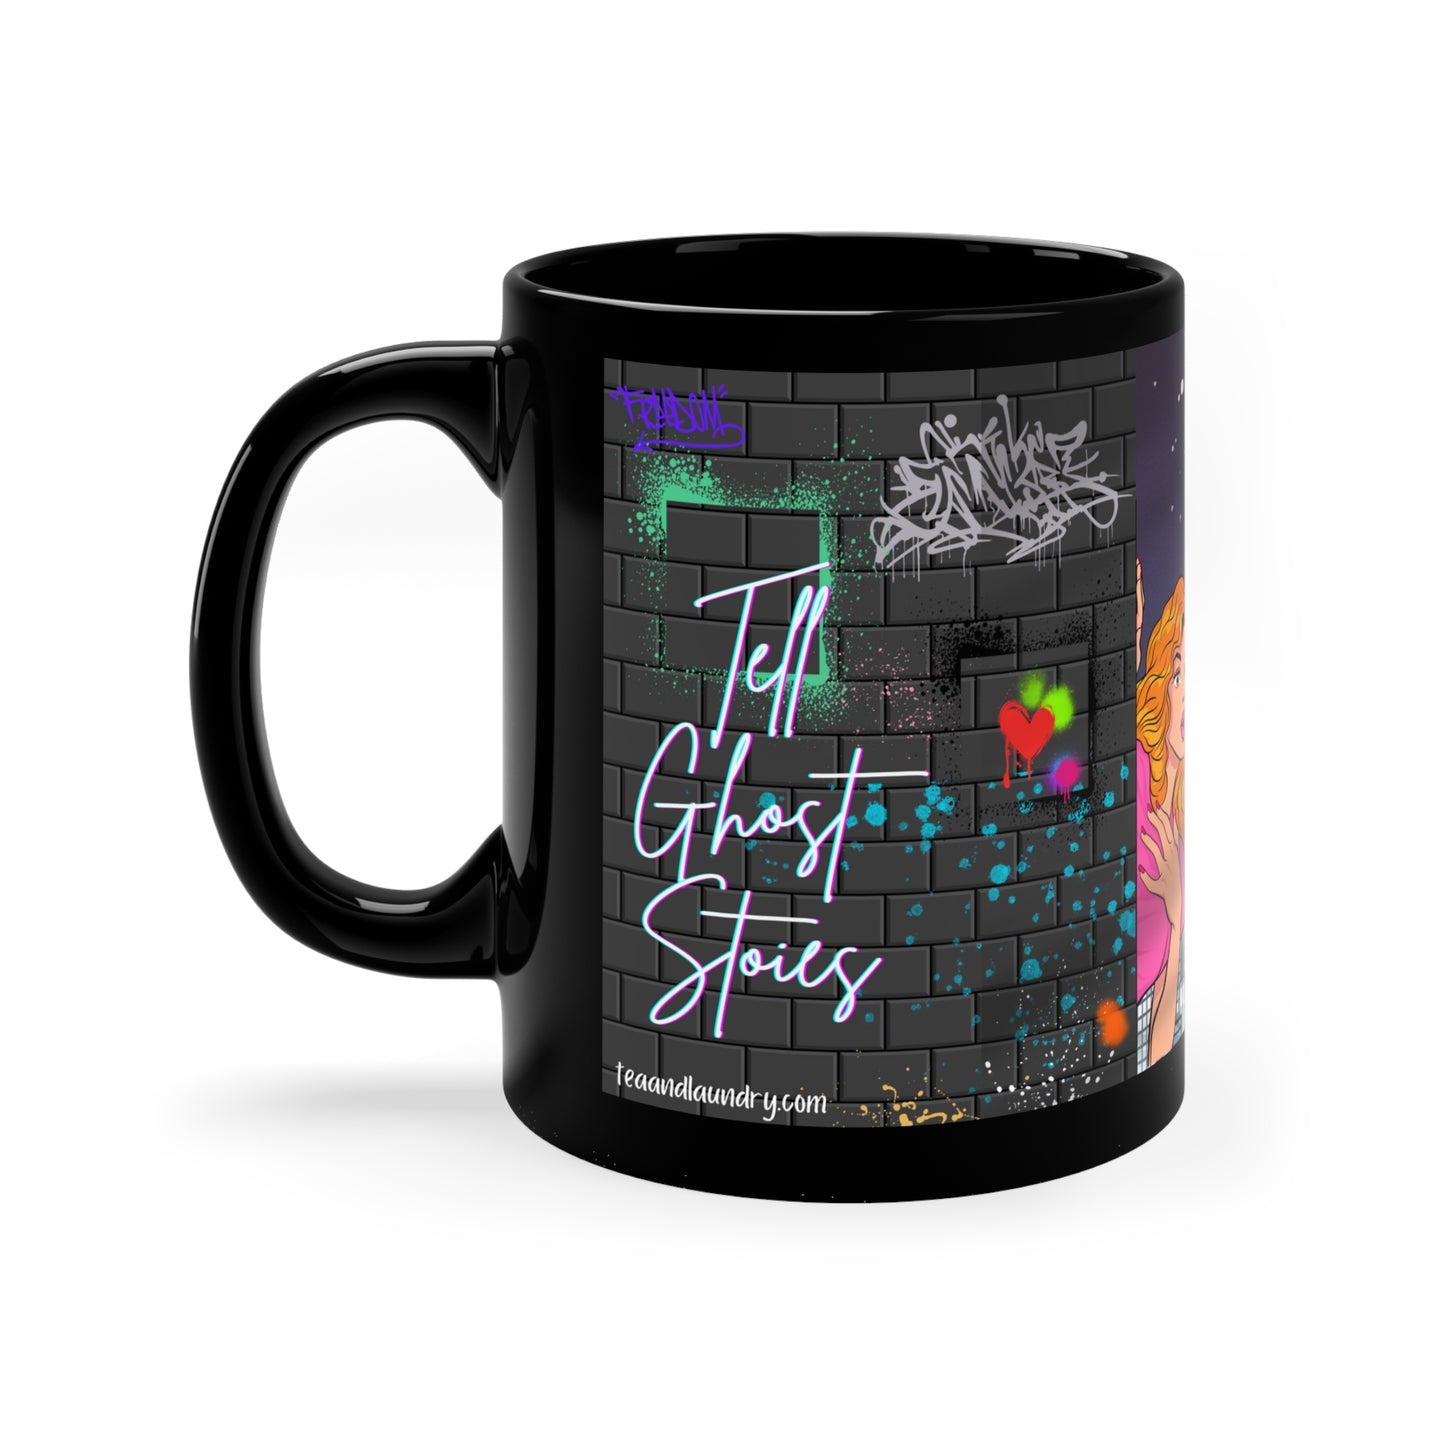 "Tell Ghost Stories" 11oz Black Mug